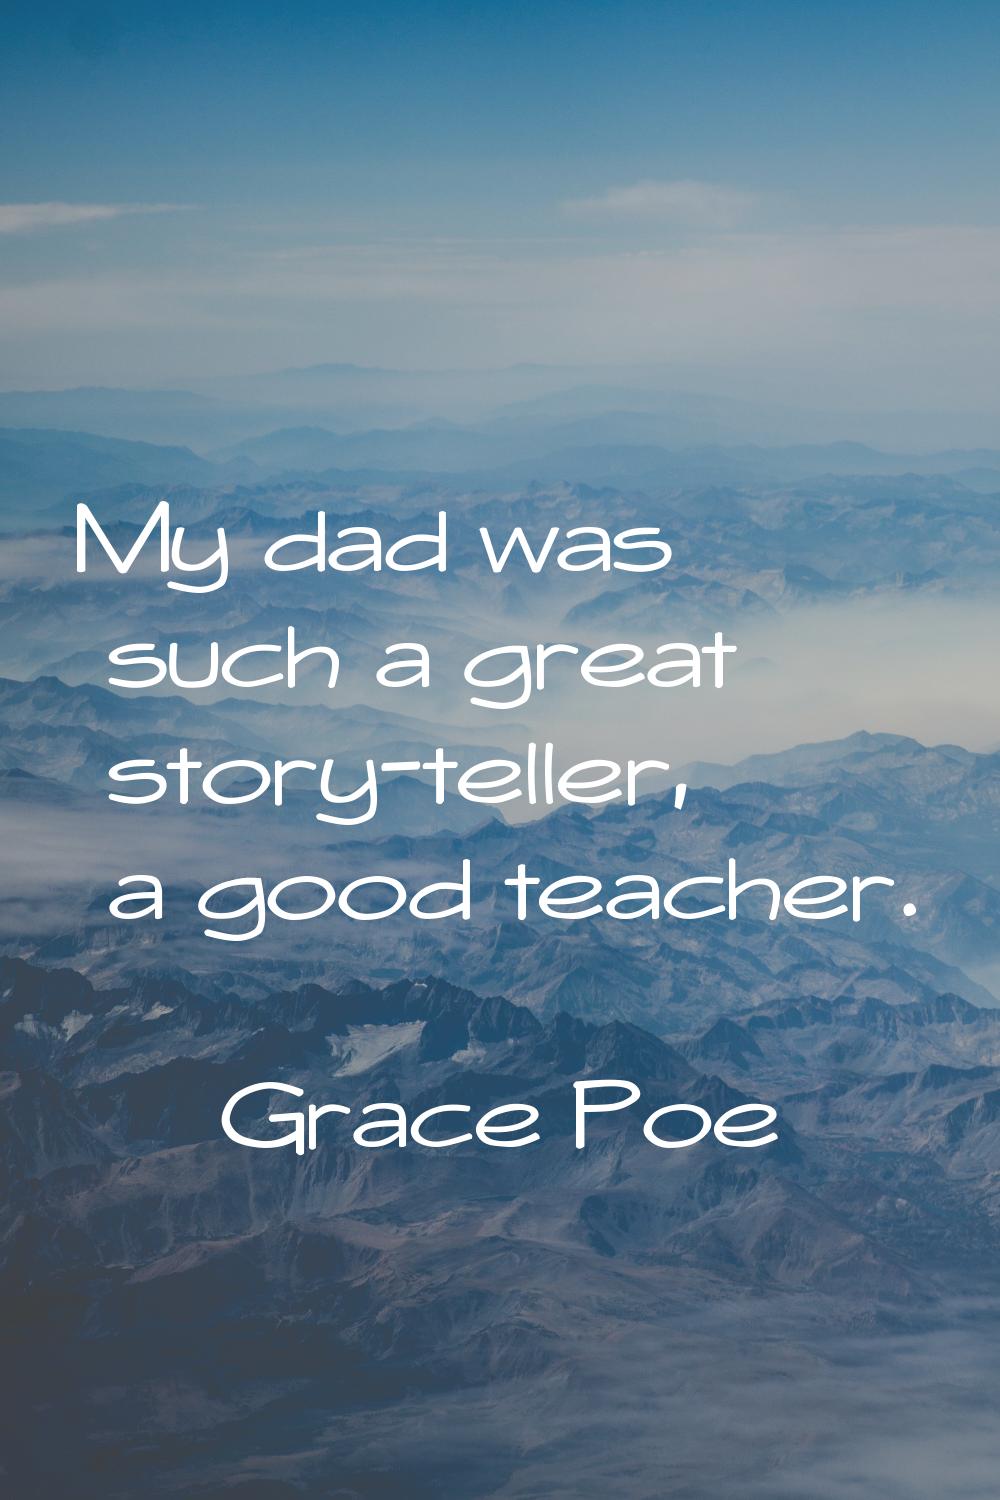 My dad was such a great story-teller, a good teacher.